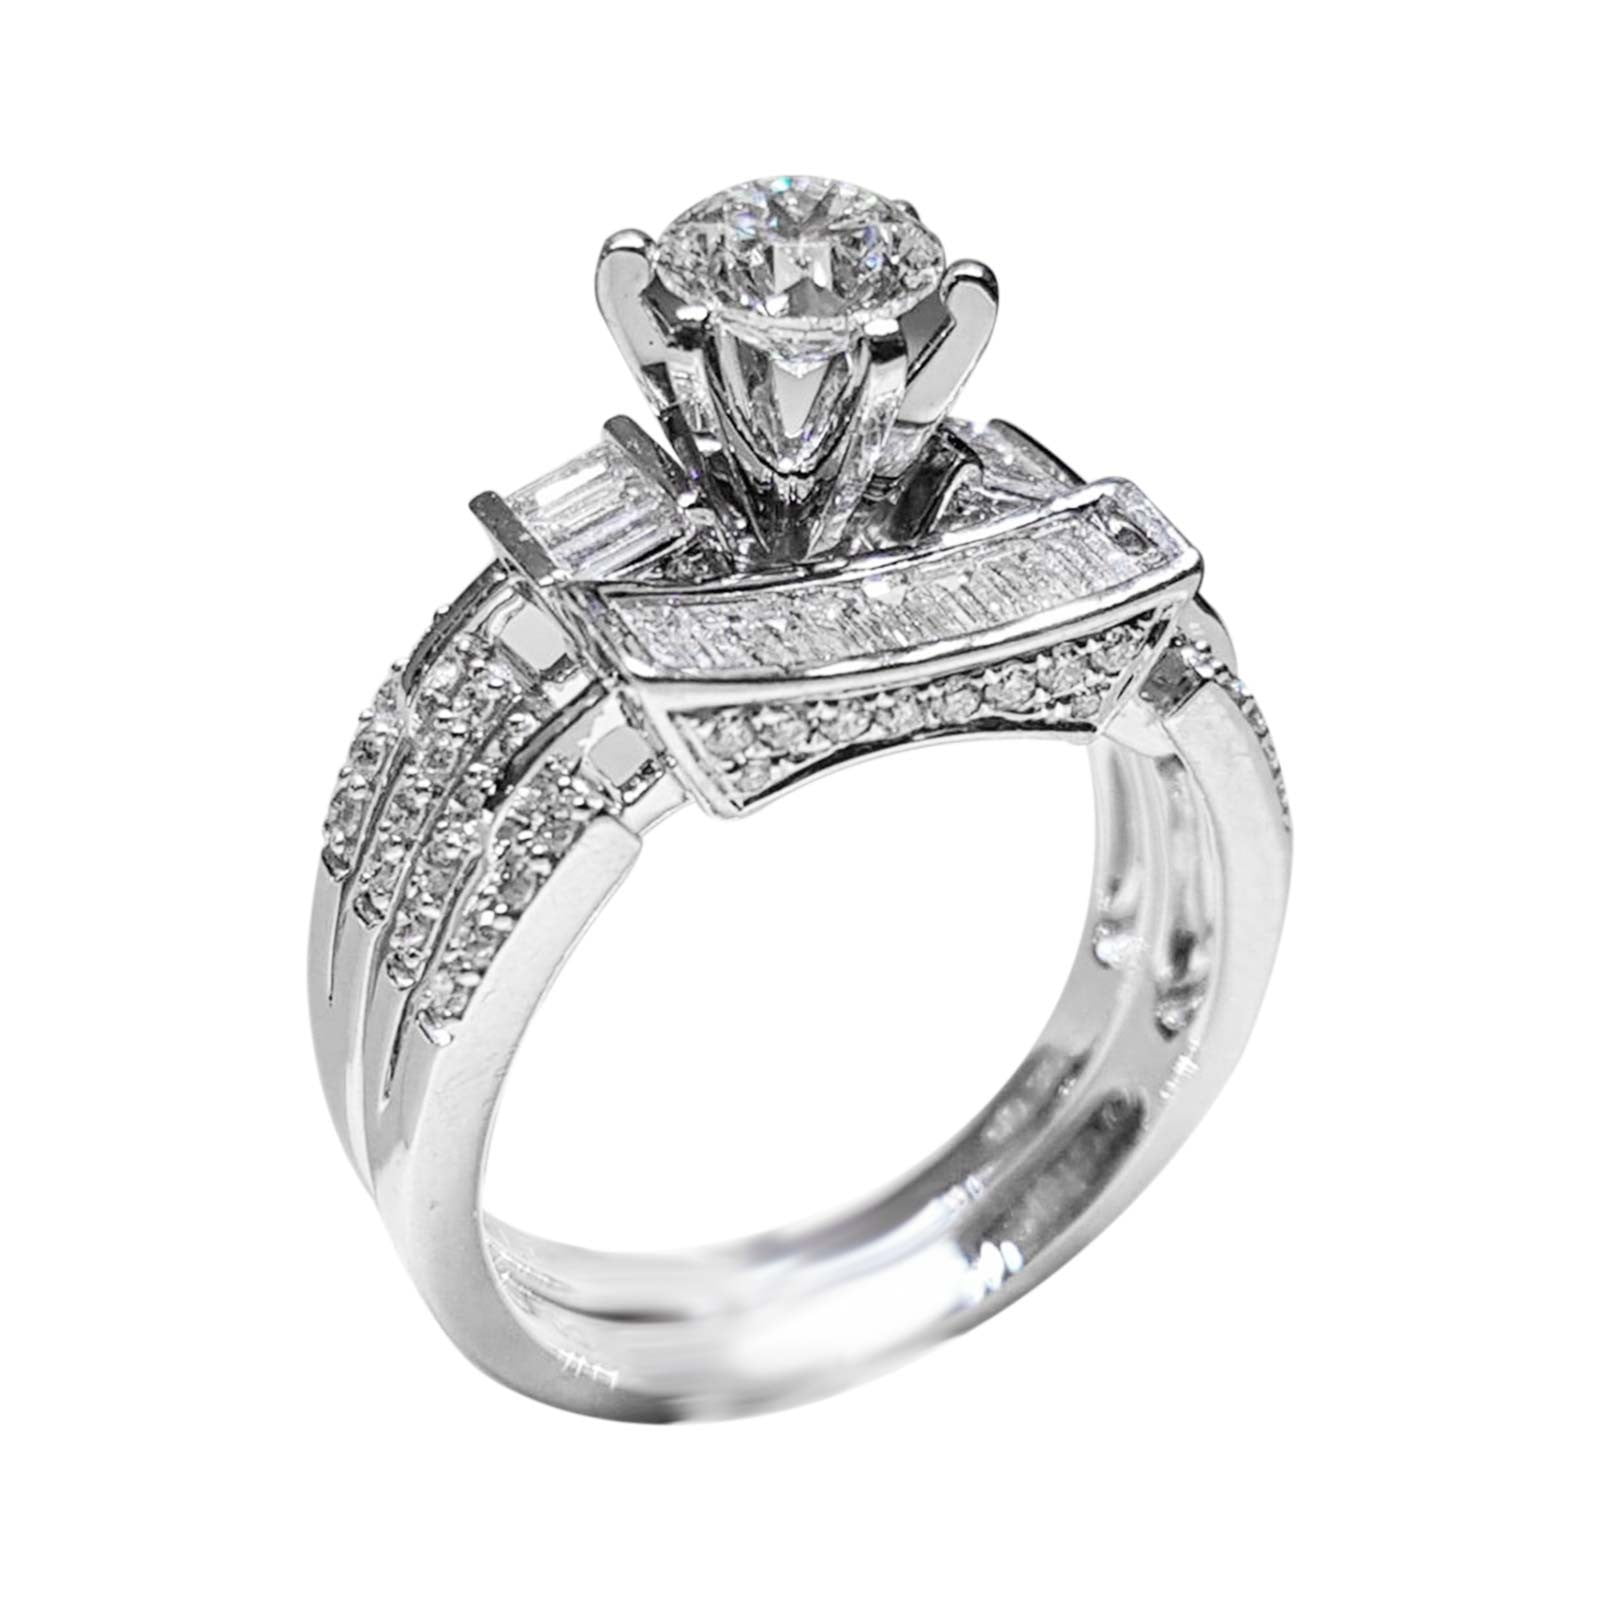 Baocc Accessories Silver Women Fashion Trend Single Full Diamond Zircon Ring  Ladies Jewelry Diamond Rings for Women Size 6 10 Rings Mr6 